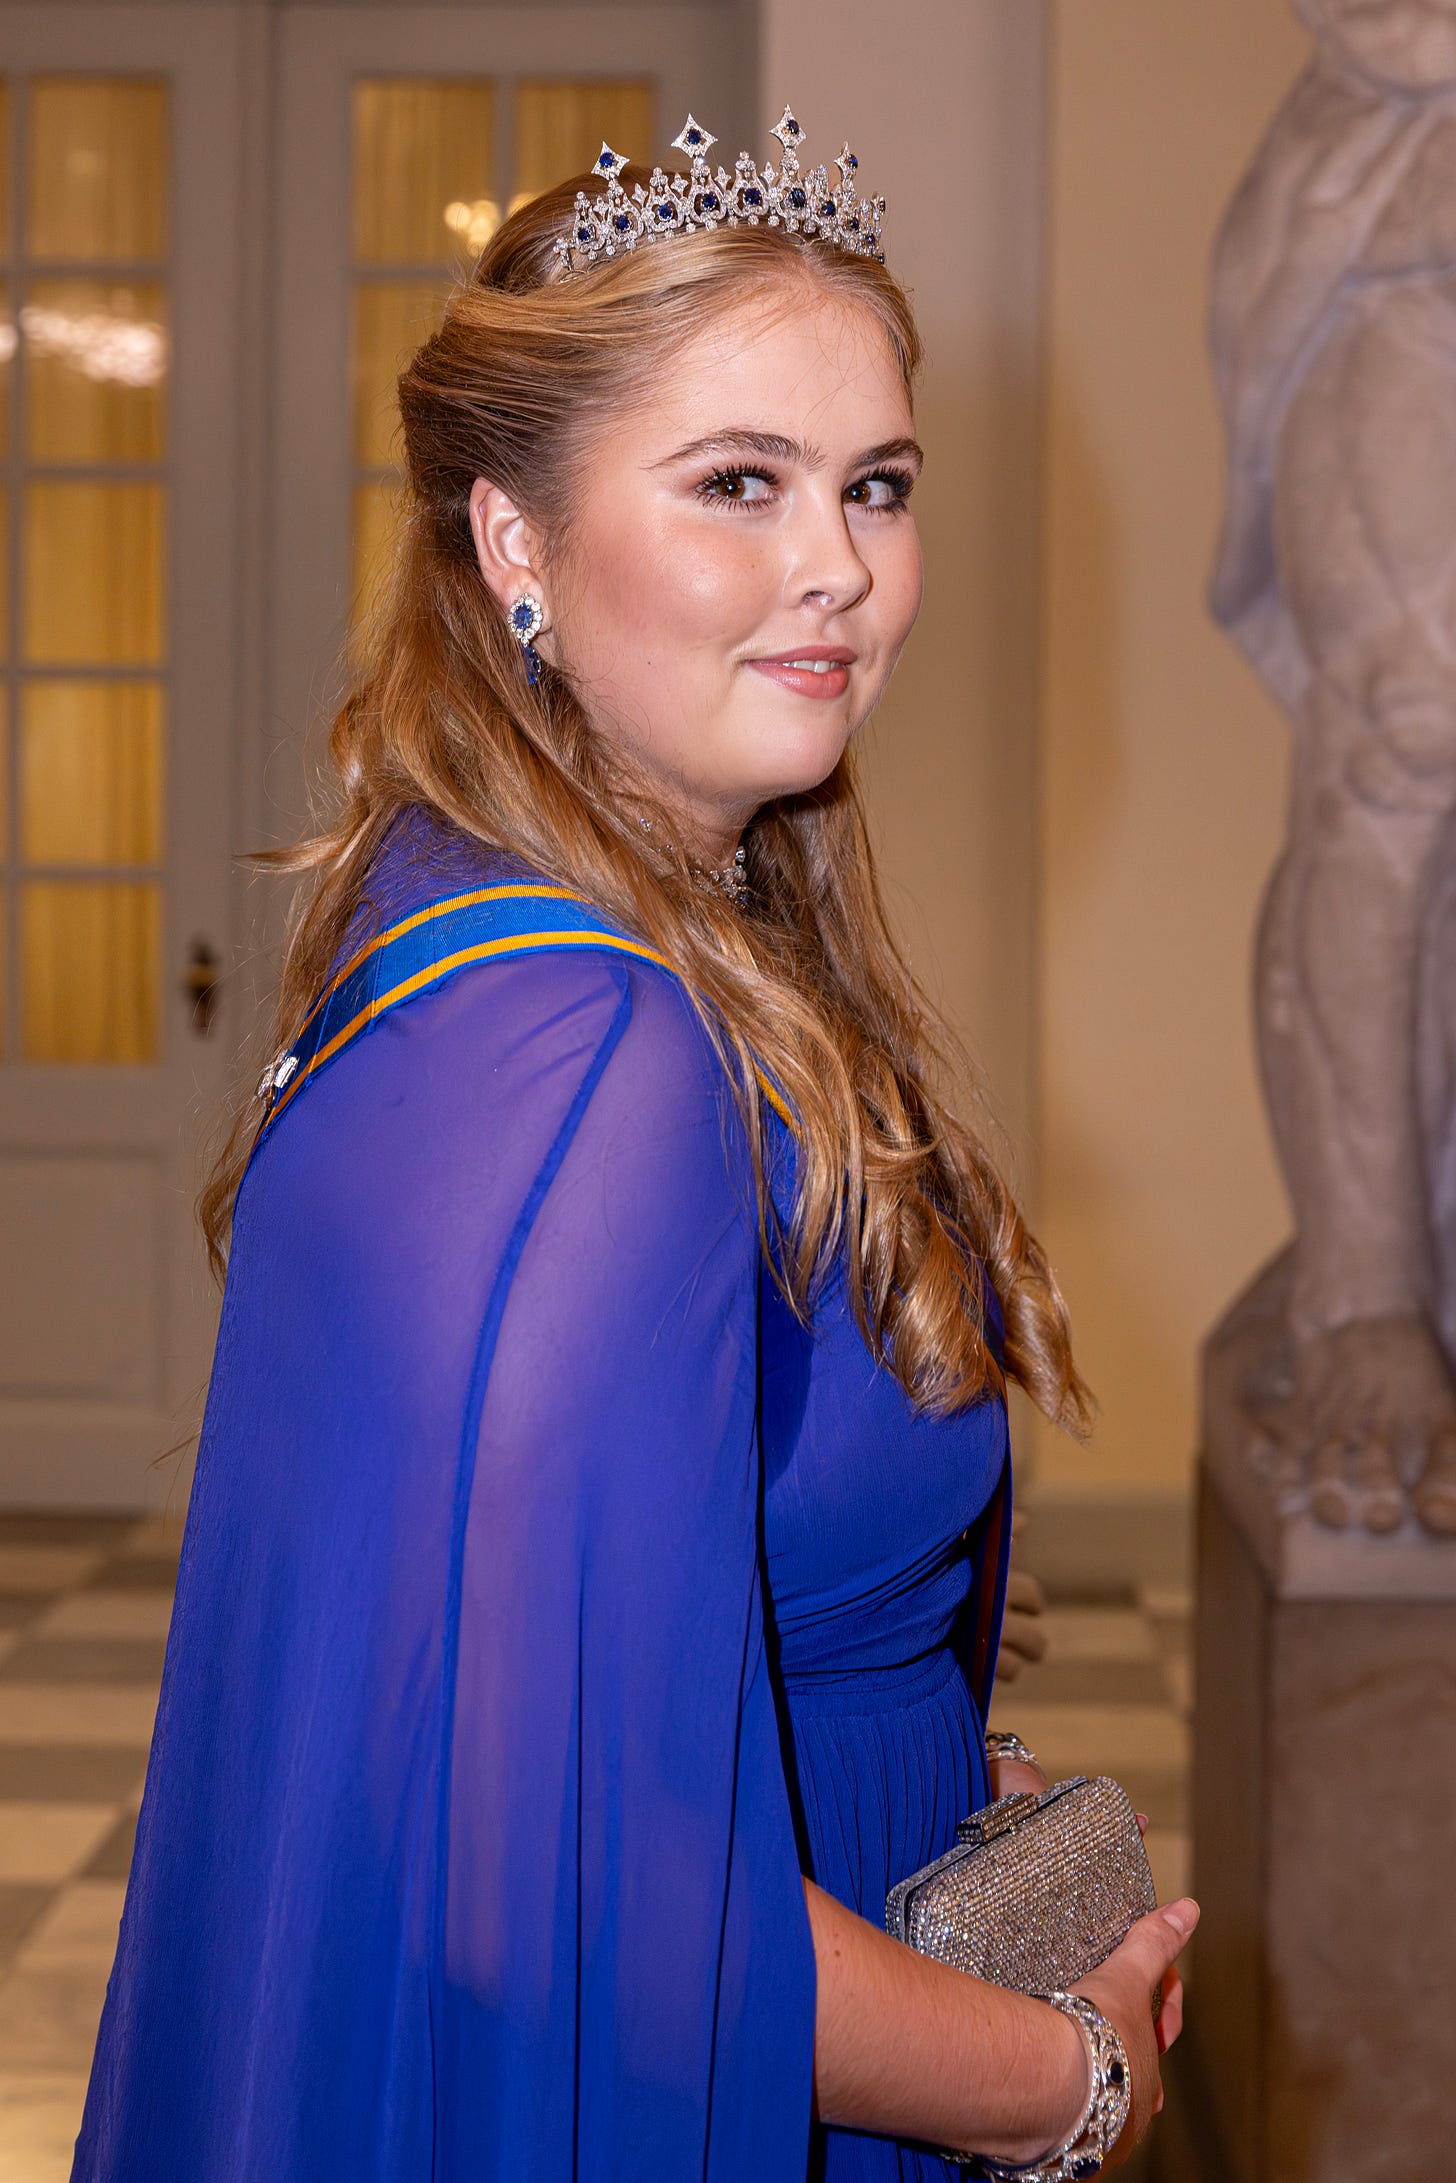 Princess Catharina-Amalia wearing blue dress and tiara